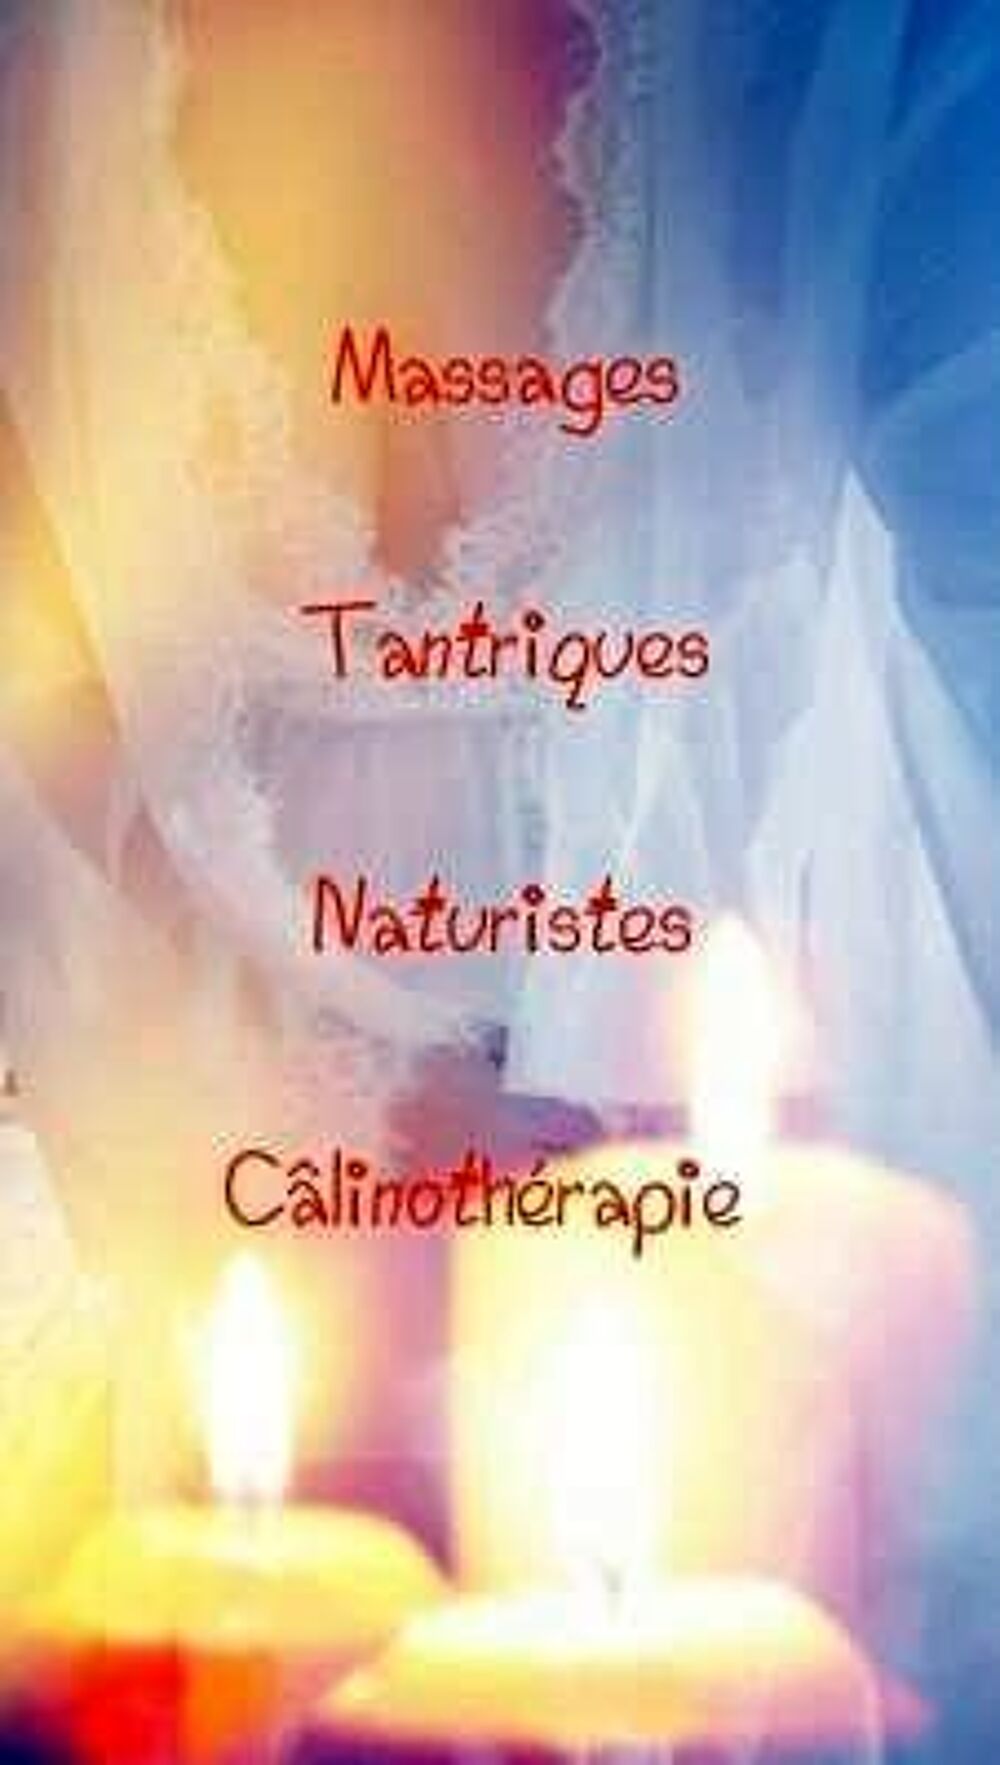   Massage Besanon : massage Tantrique, Naturiste, Clinothrapie  